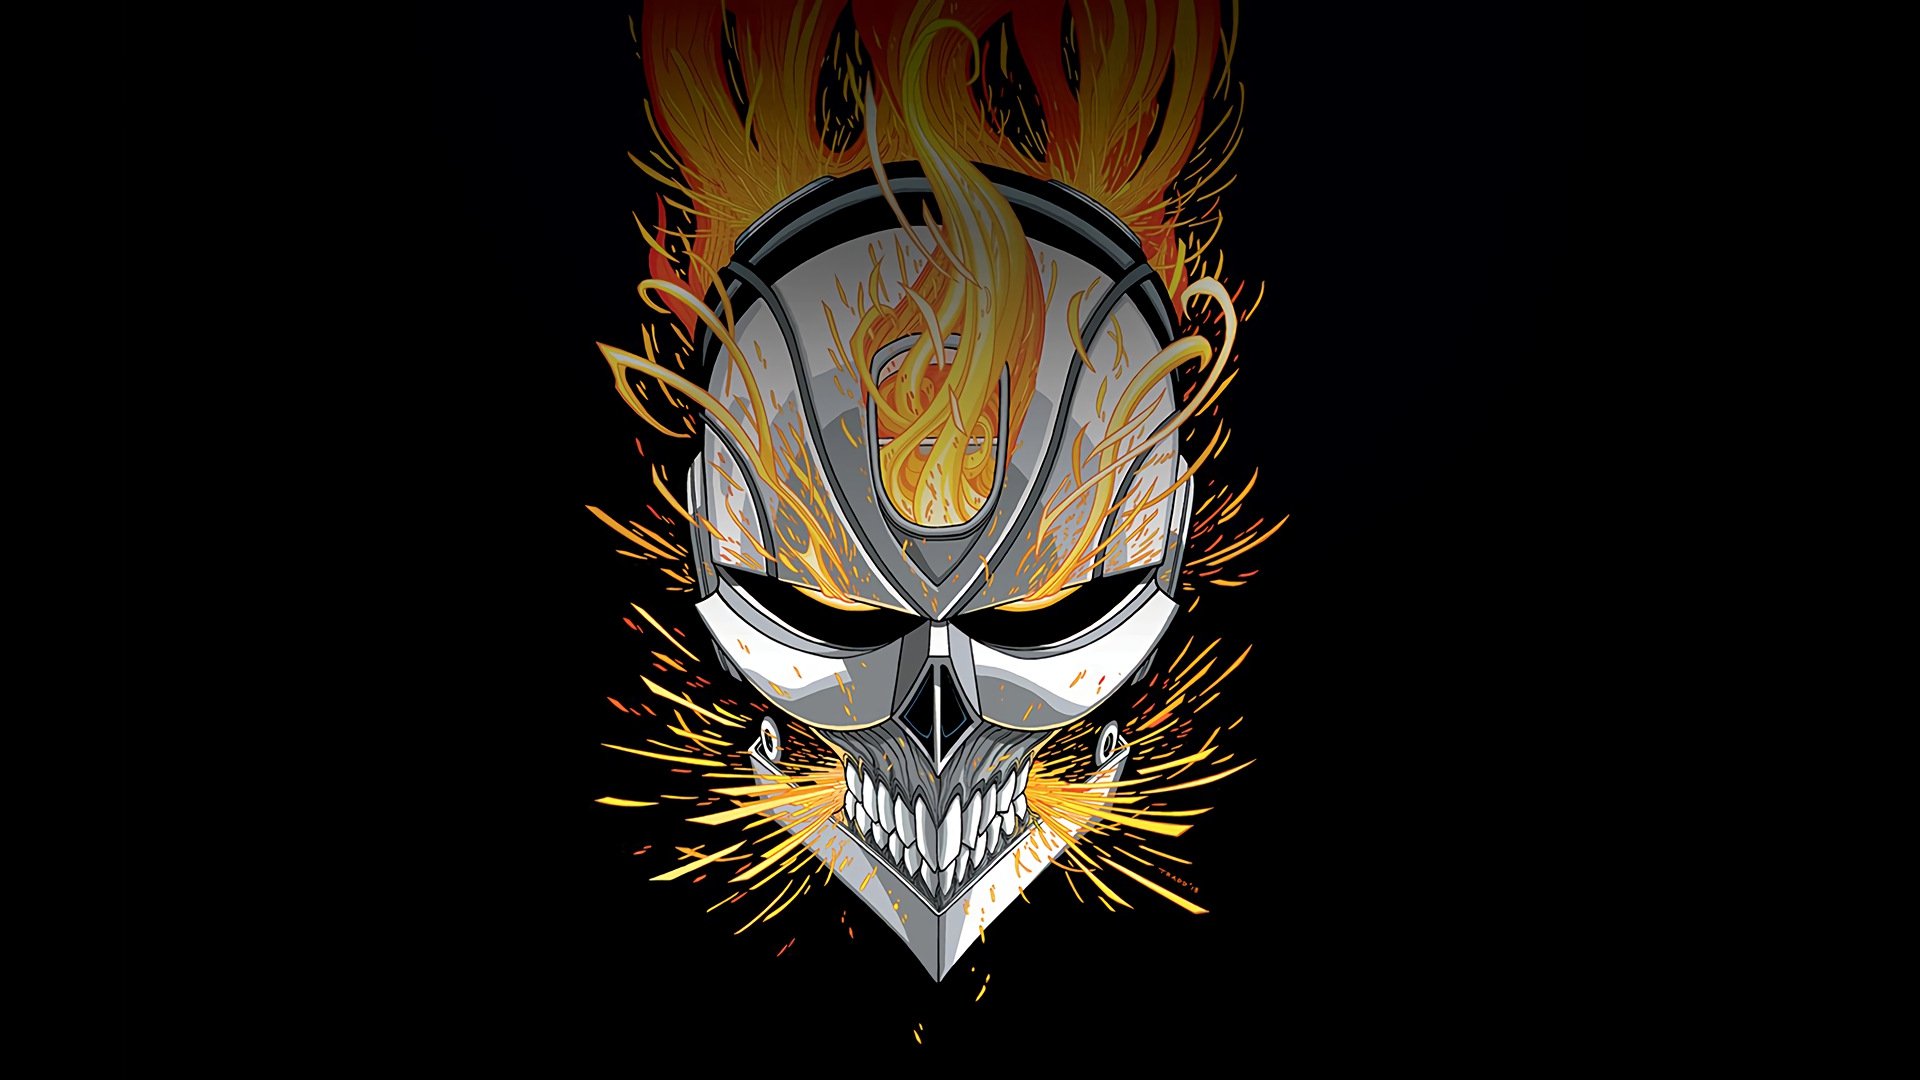 Marvel Comics, Ghost Rider, Robbie  Reyes, Skull, Fire, Black background Wallpaper